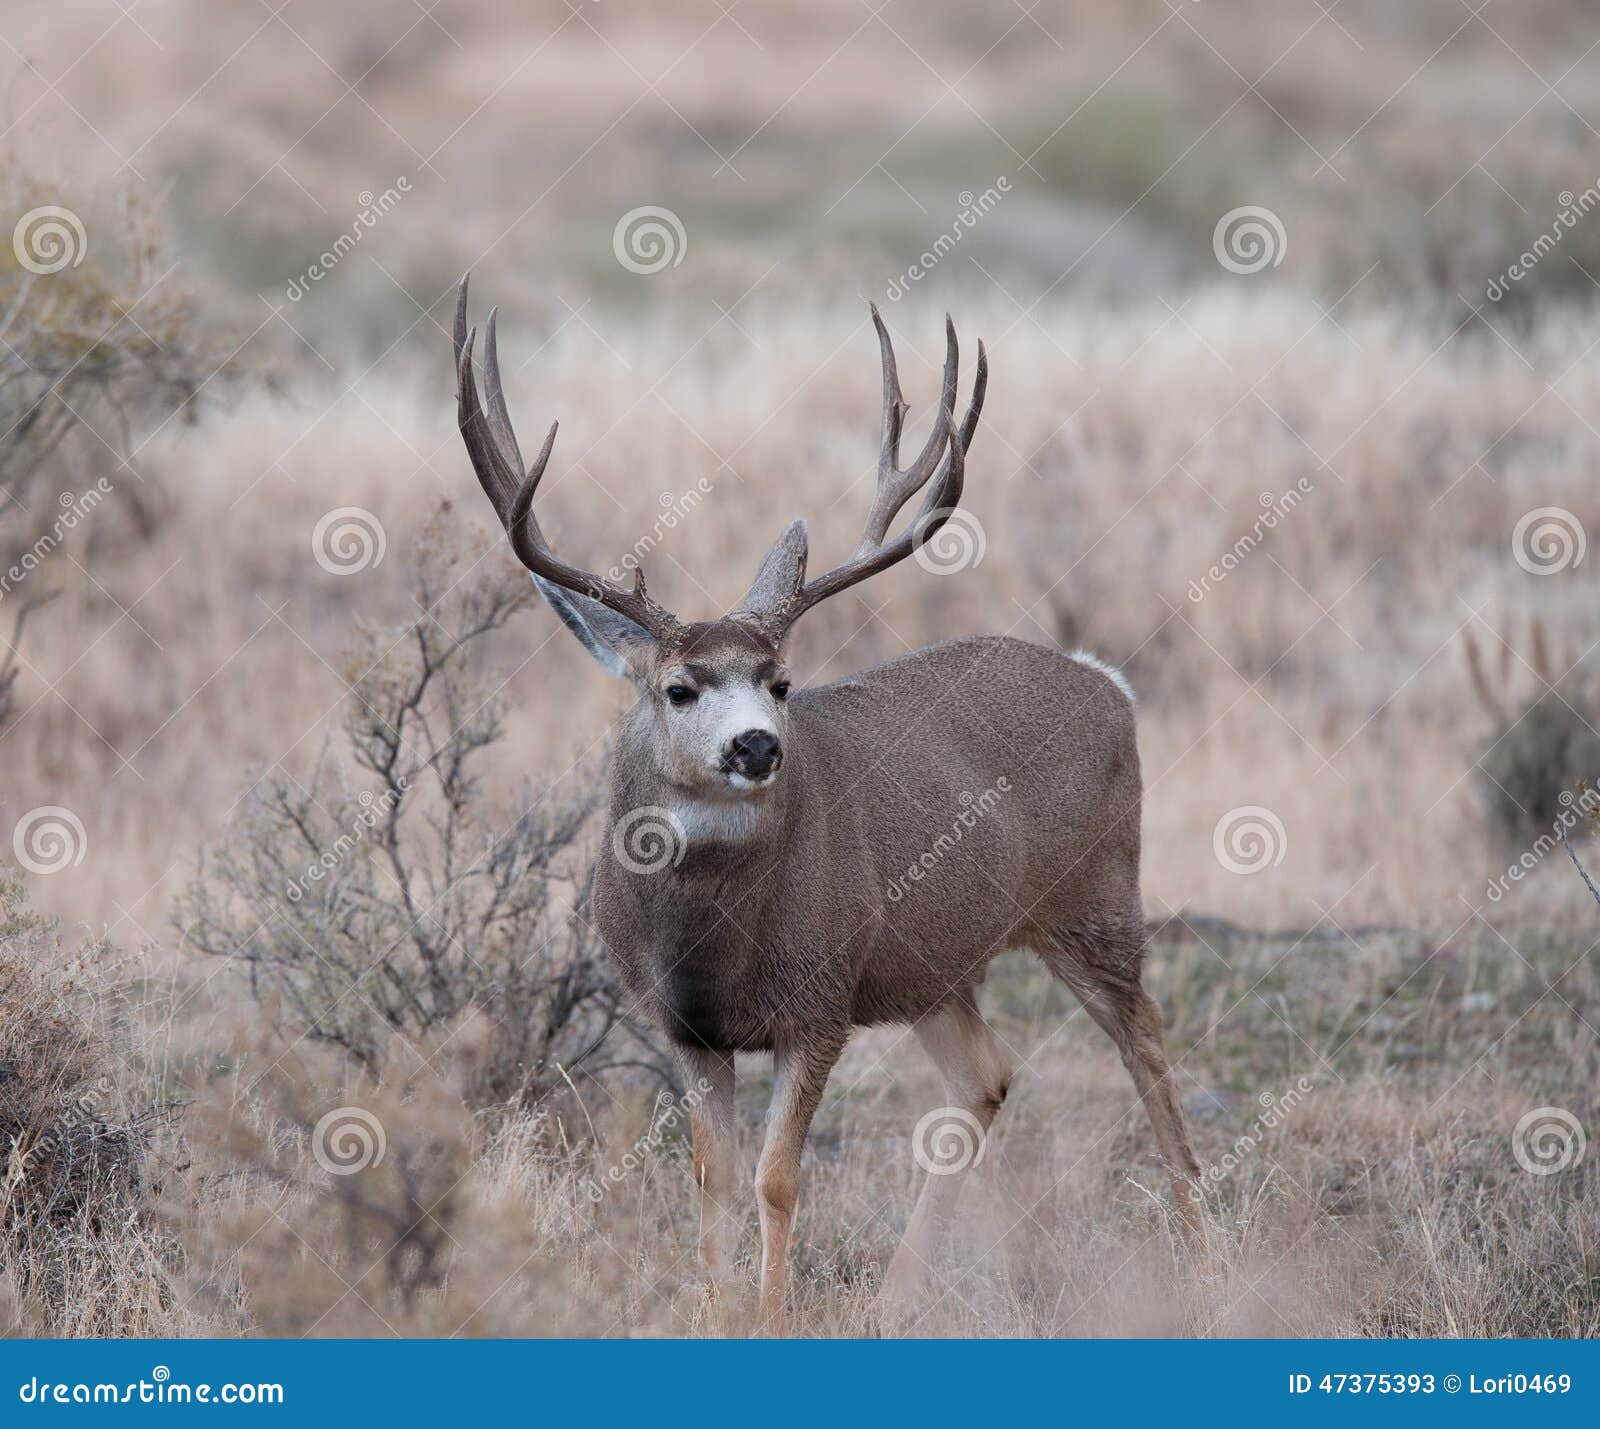 large mule deer buck picks up on scent